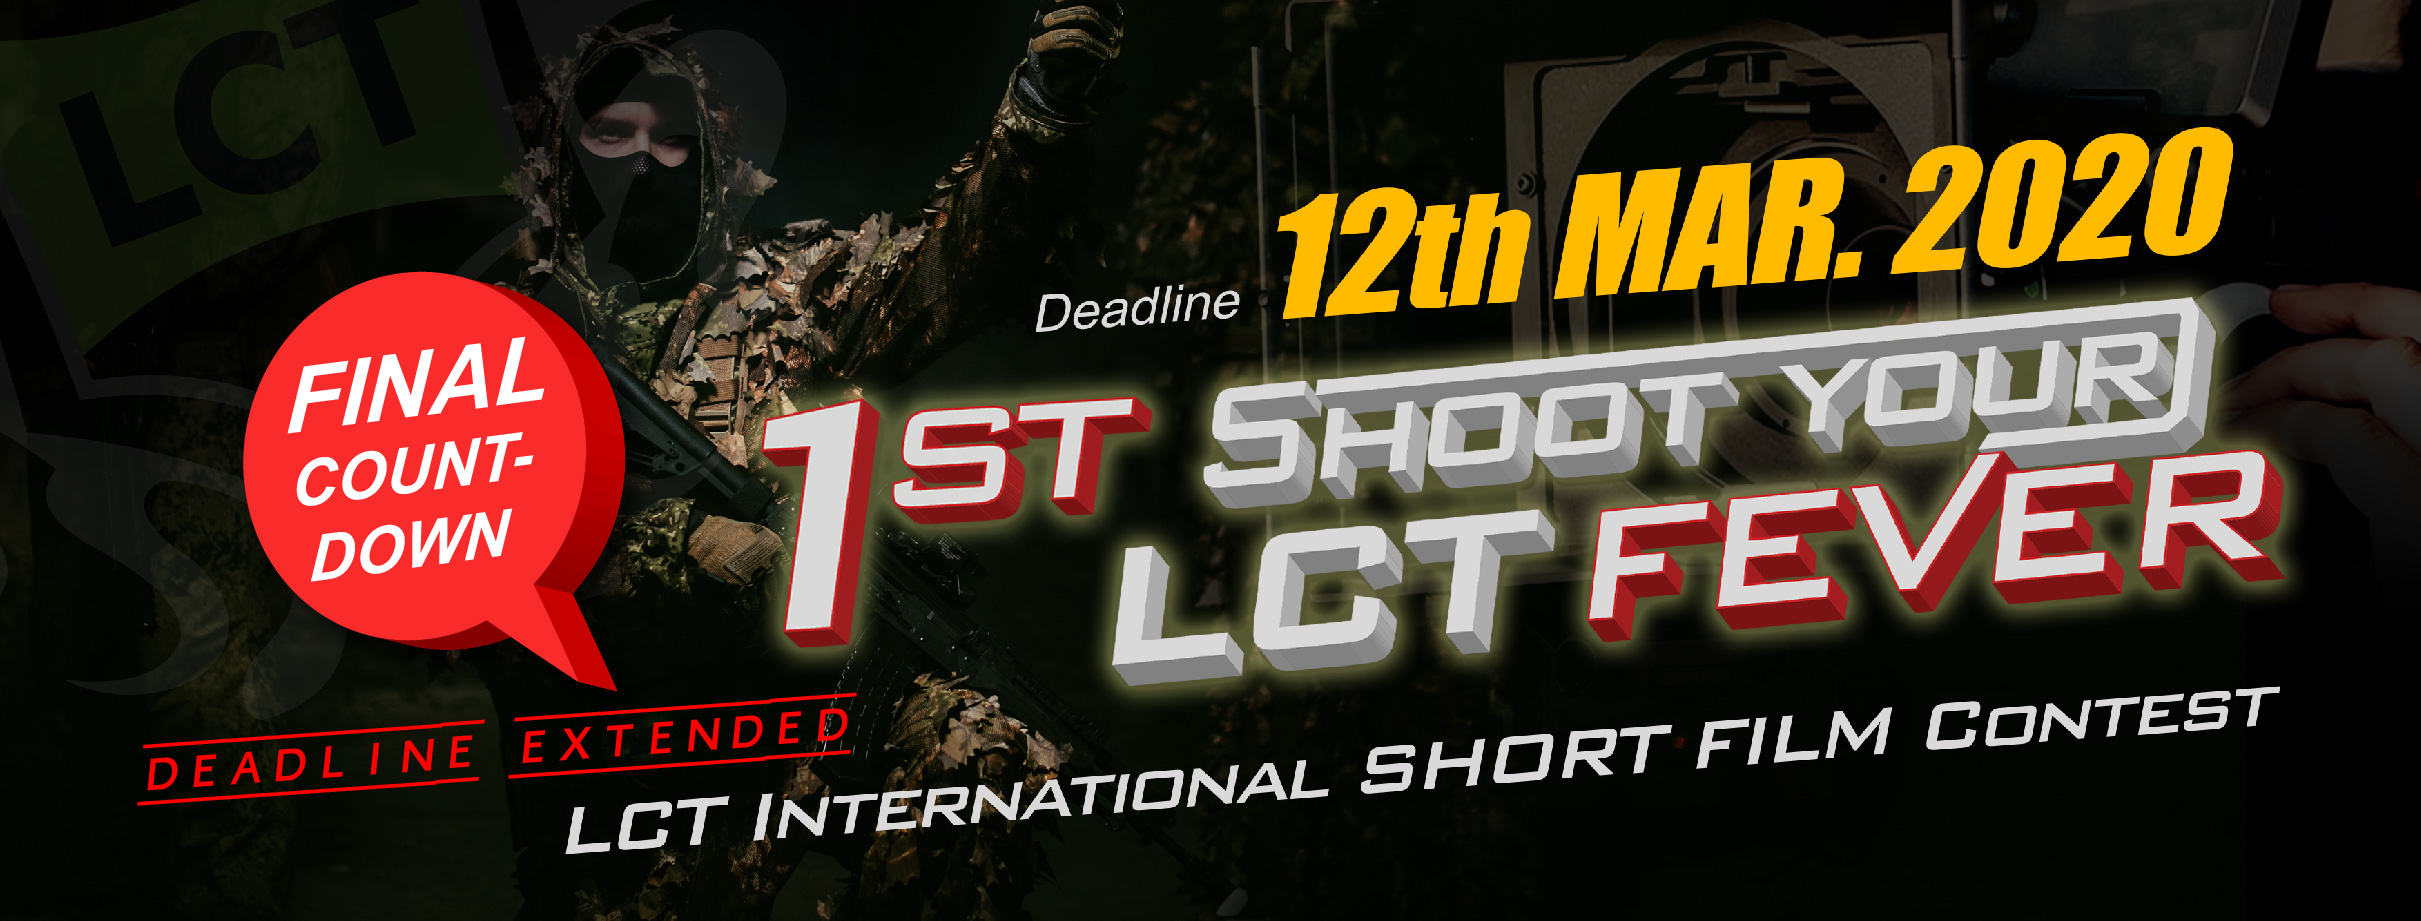 short-film-contest-eng-513ebad3f73d0aeb9e17160fbe1baa8f.jpg